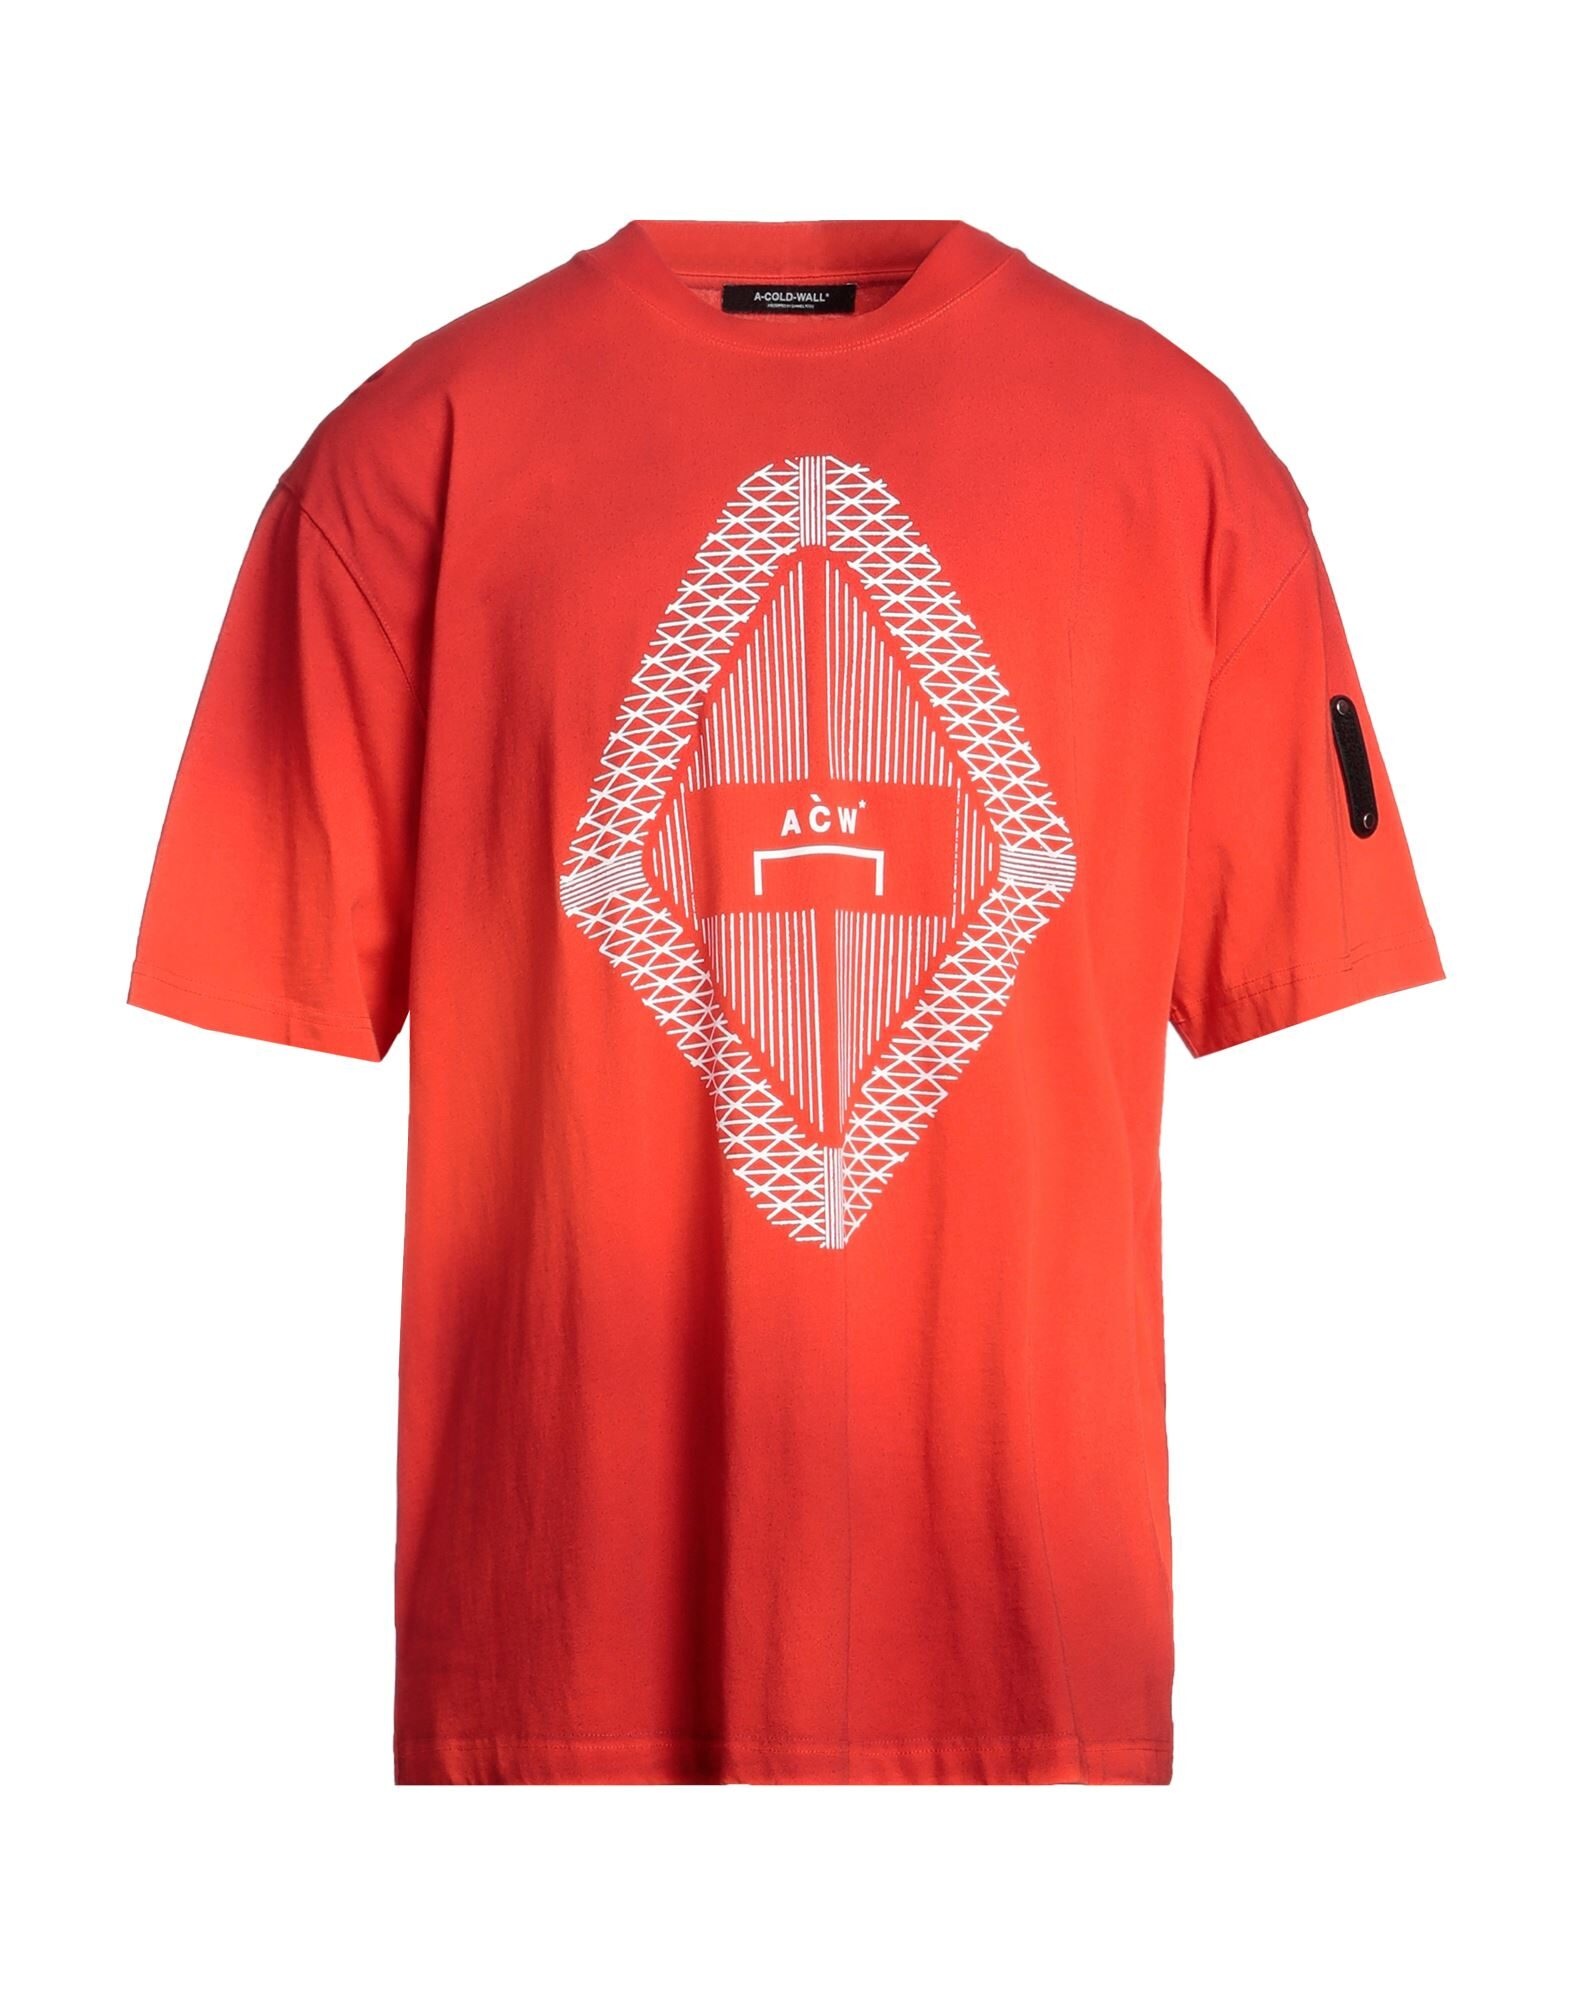 Red Men's T-shirt - 1